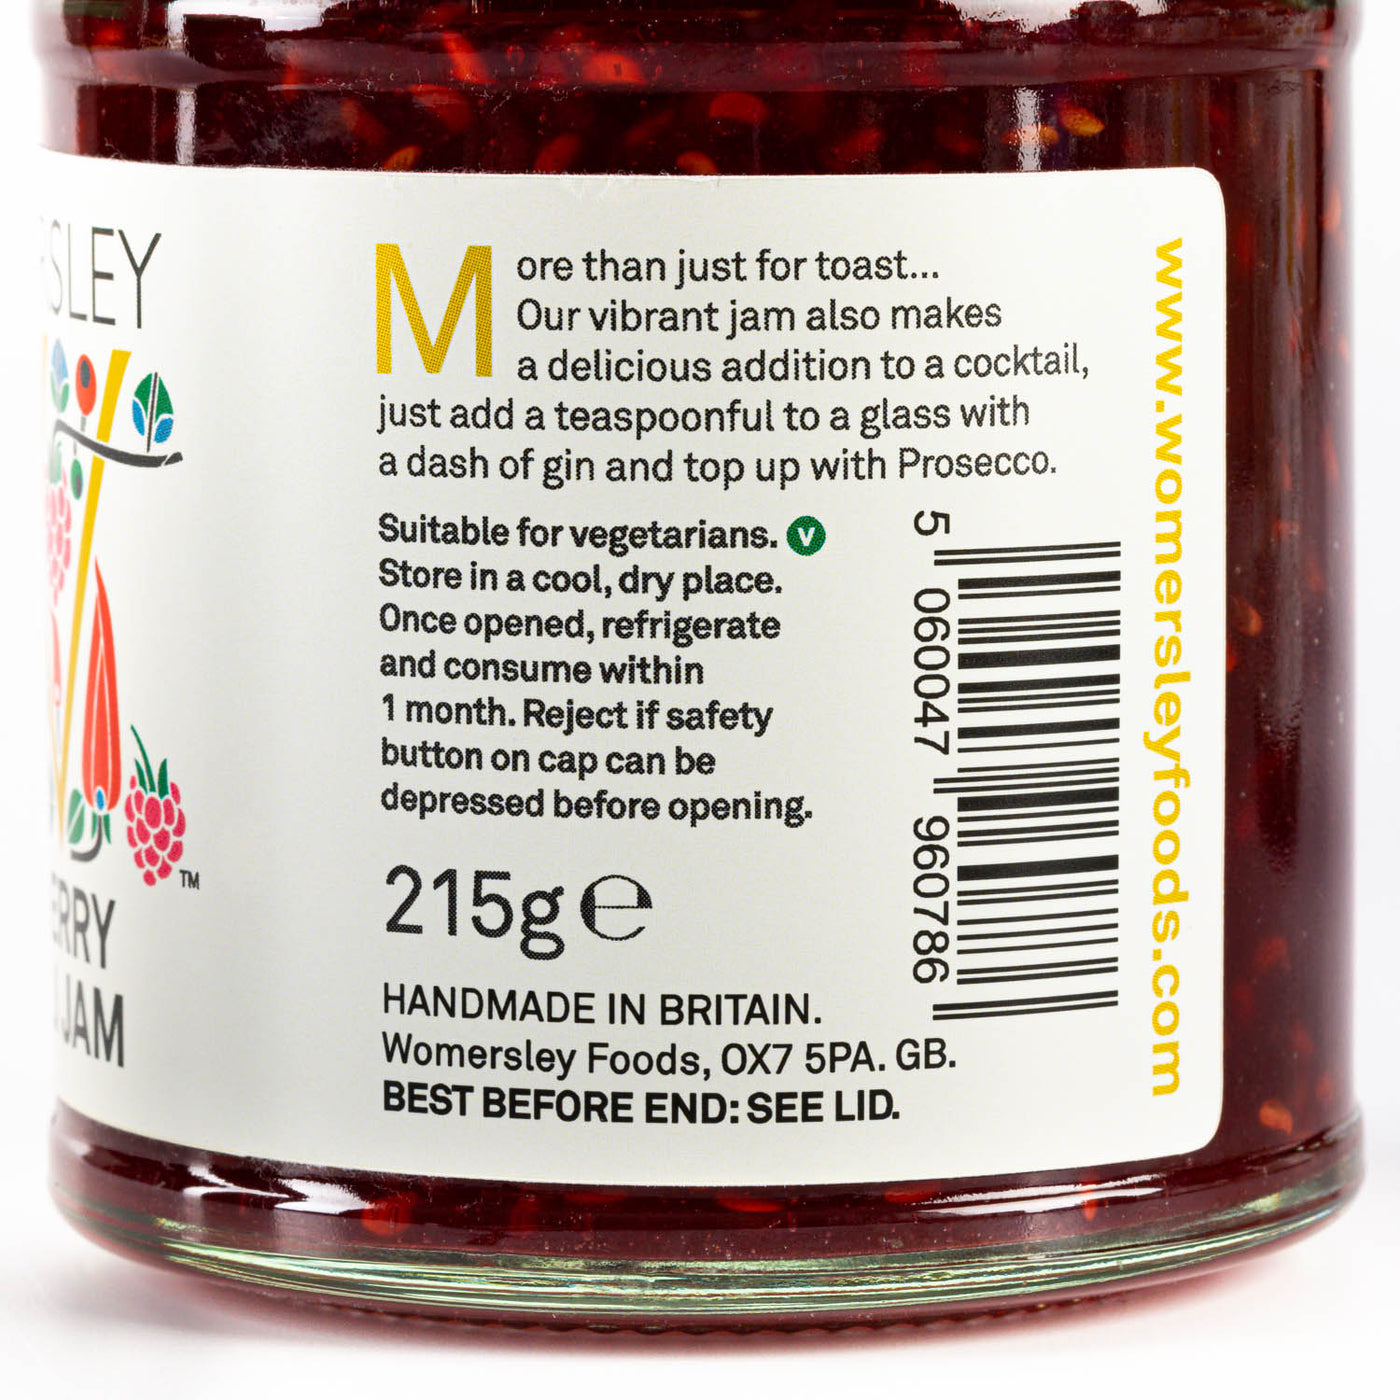 Raspberry & Chilli Jam, 215g. More Fruits, Less Sugar